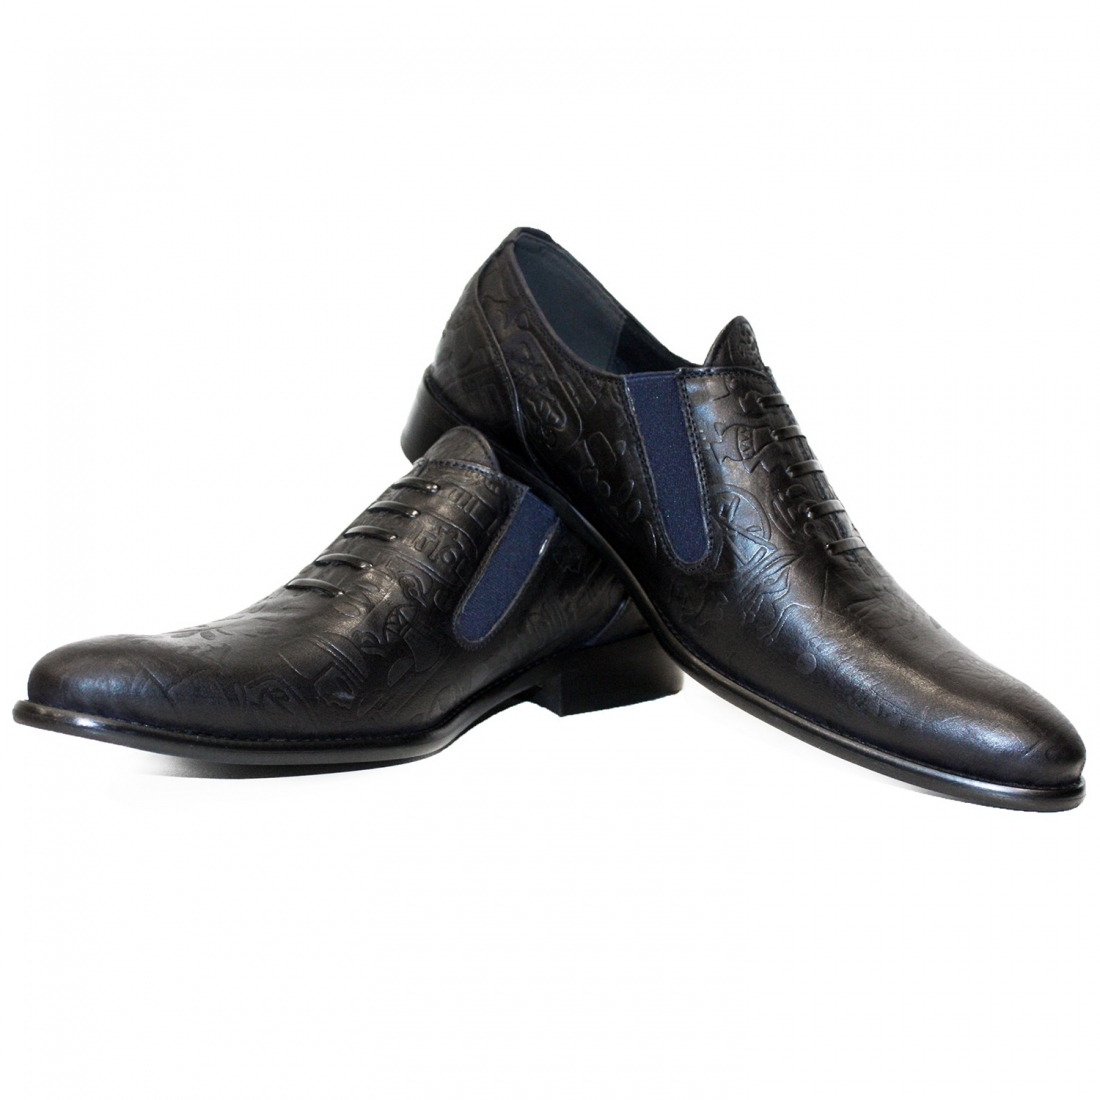 Modello Cretorro - Loafers & Slip-Ons - Handmade Colorful Italian Leather Shoes